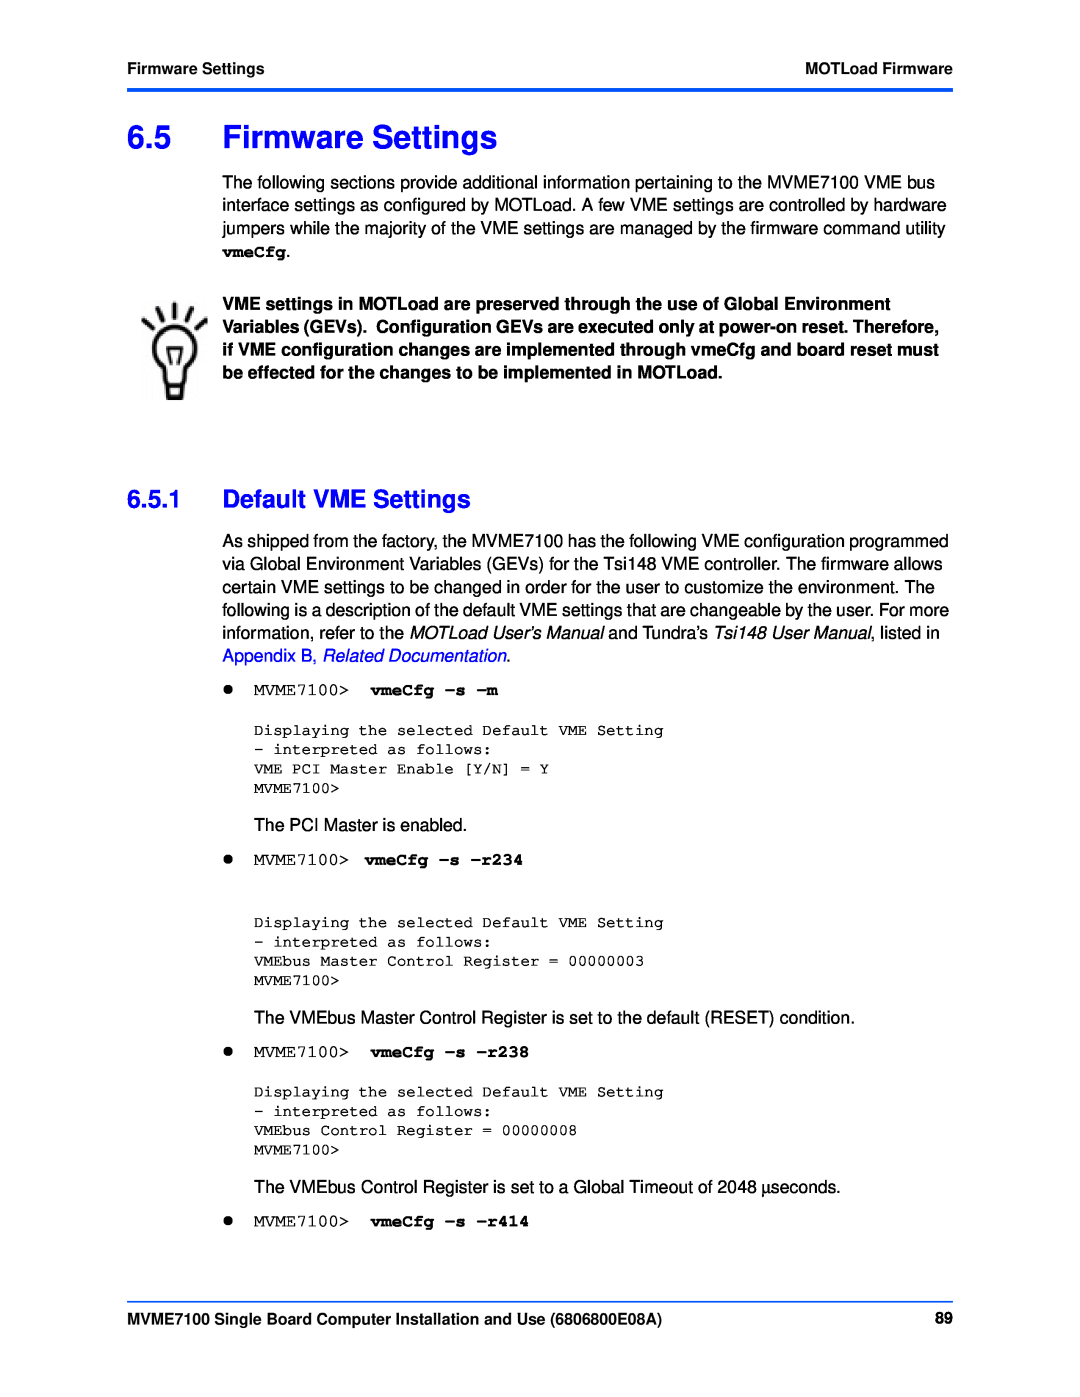 Emerson manual Firmware Settings, Default VME Settings, z MVME7100 vmeCfg -s -m, z MVME7100 vmeCfg -s -r234 